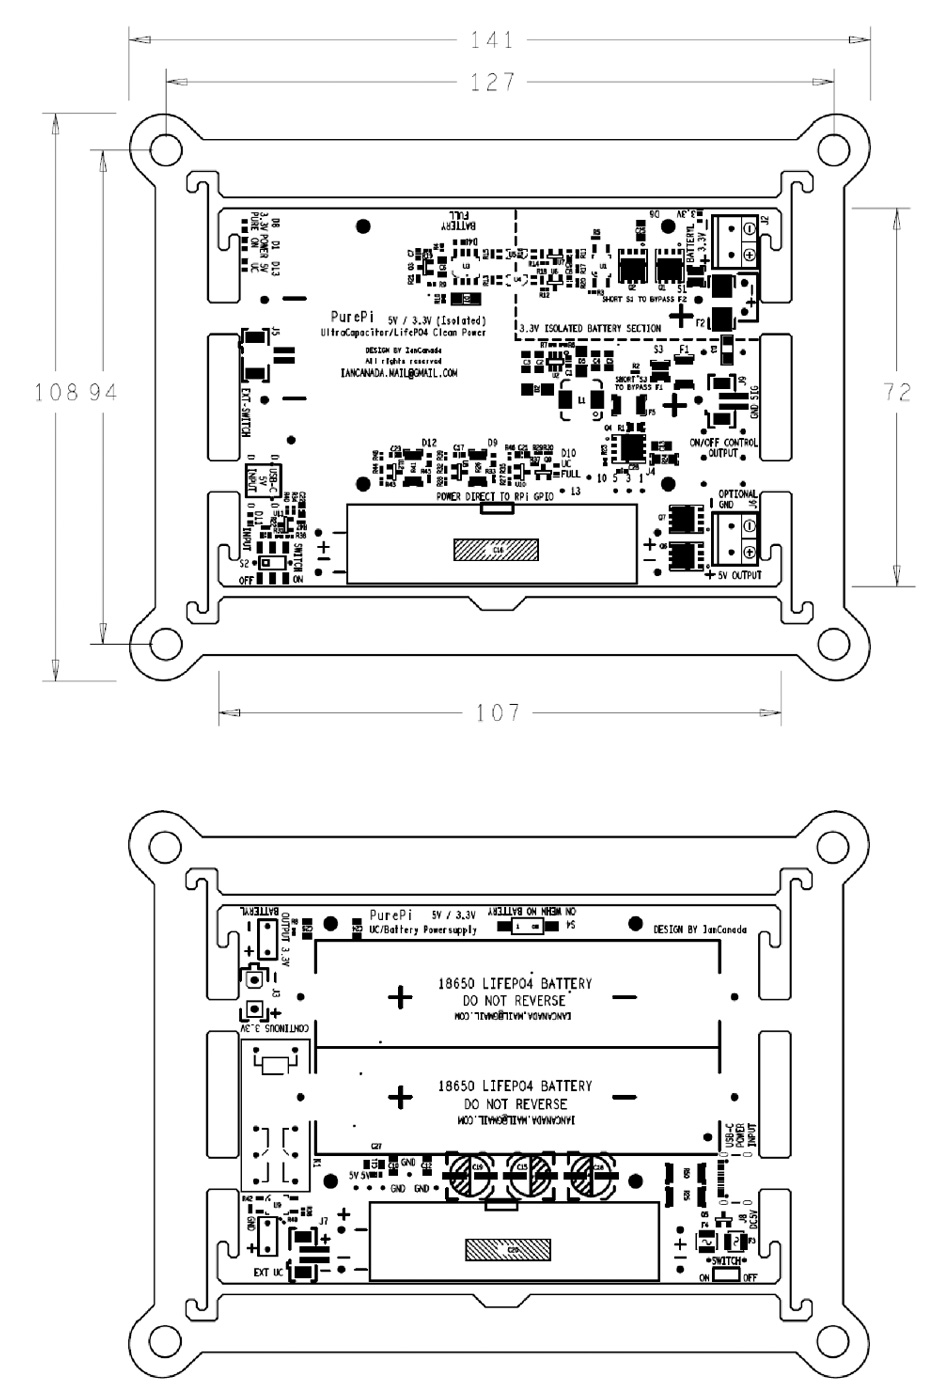 IAN CANADA PUREPI II Ultracapacitor / Batteries Dual Power Supply Module for Raspberry Pi 5V / 3.3V